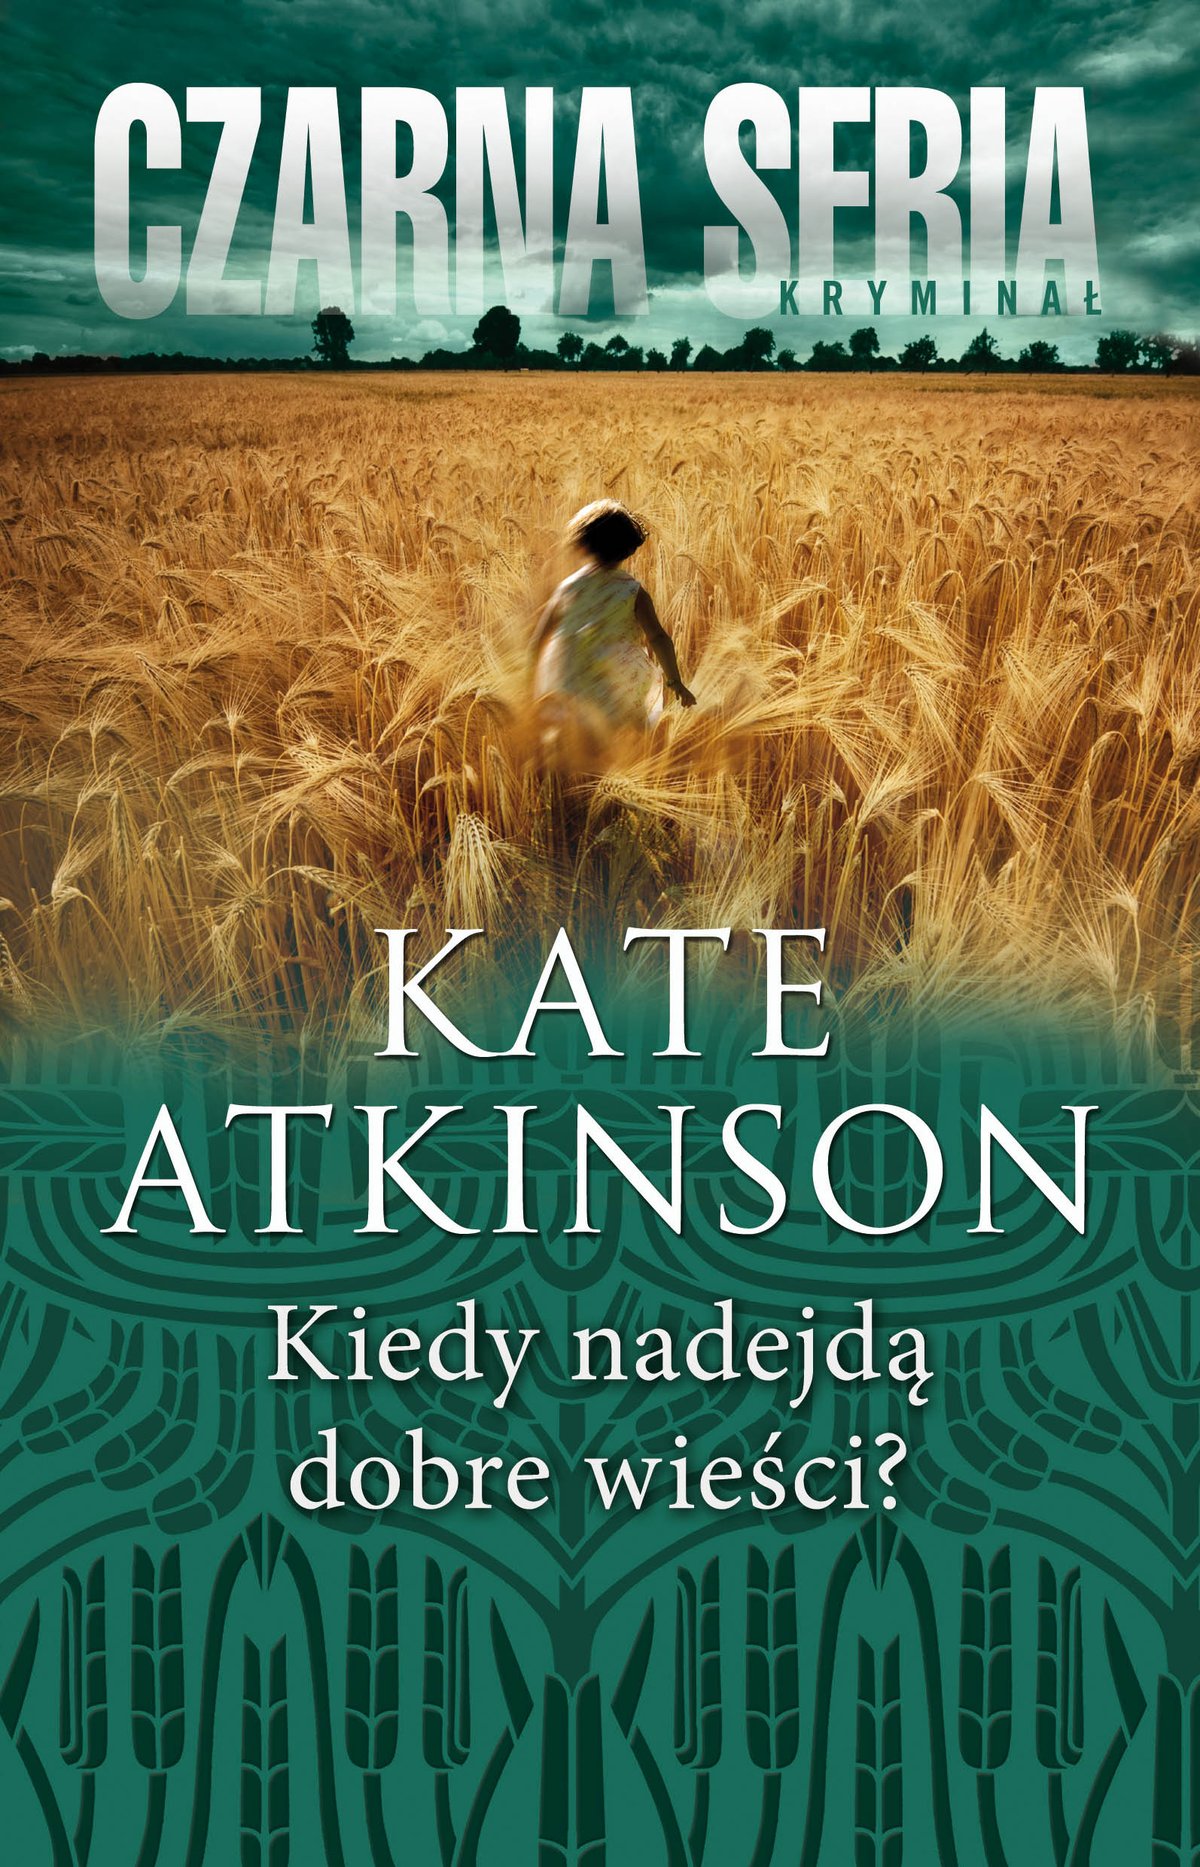 One good turn. Кейт Аткинсон. Atkinson Kate "Case Histories". Kate Atkinson books. Кейт Аткинсон книги по порядку.